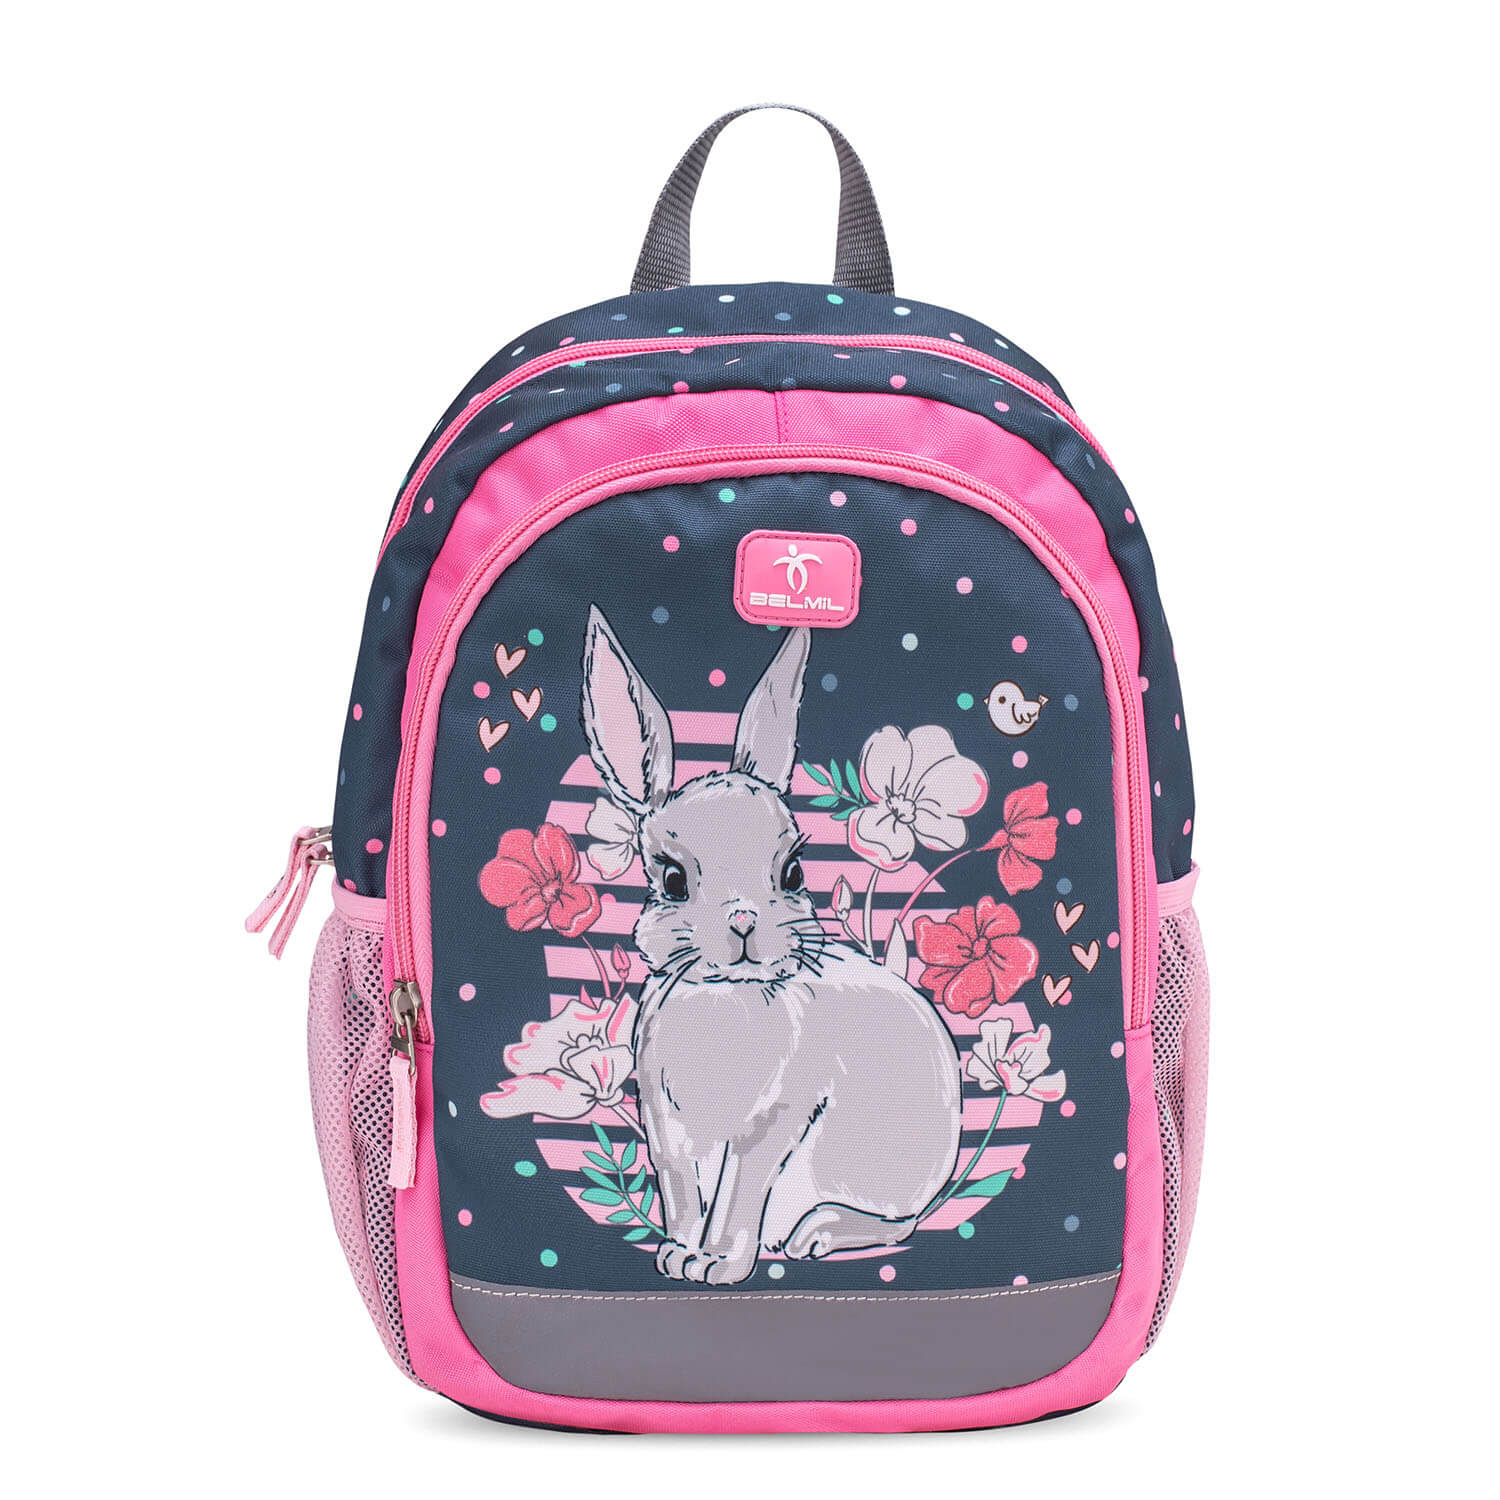 Kiddy Plus Bunny Kindergarten Bag mit GRATIS Storage box